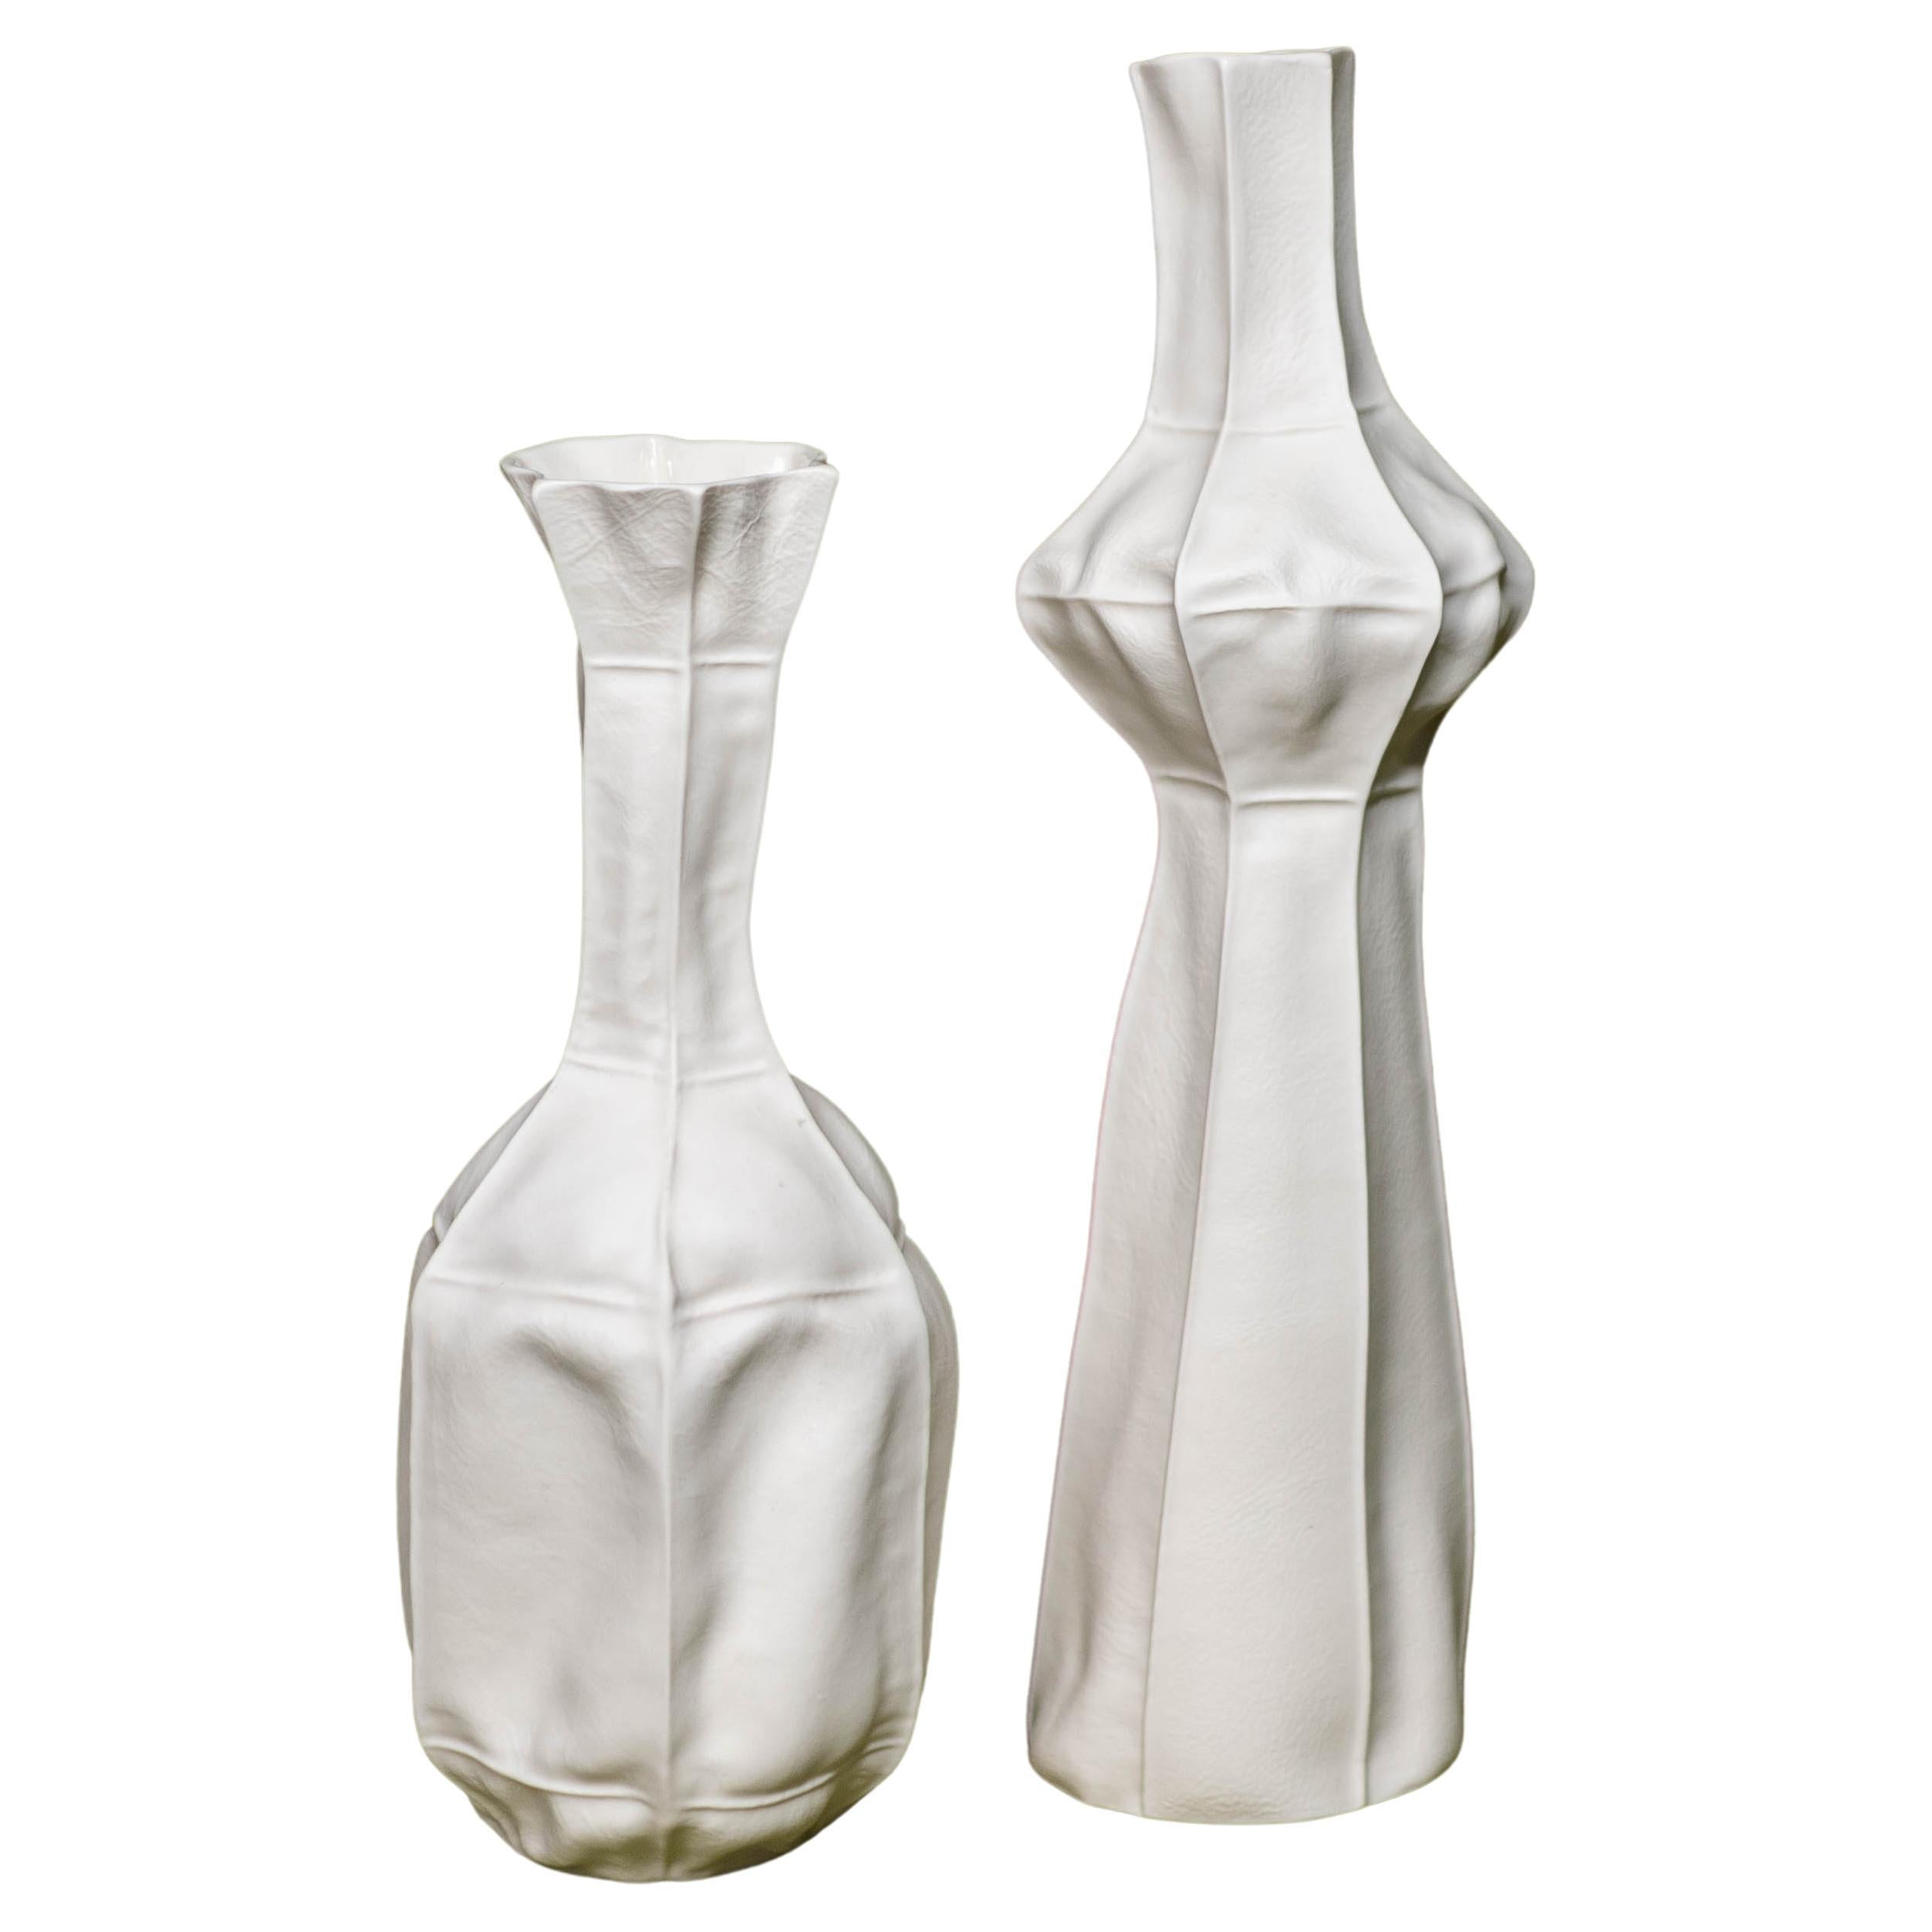 In Stock, Pair of White Ceramic Kawa Vases, by Luft Tanaka, organic, porcelain